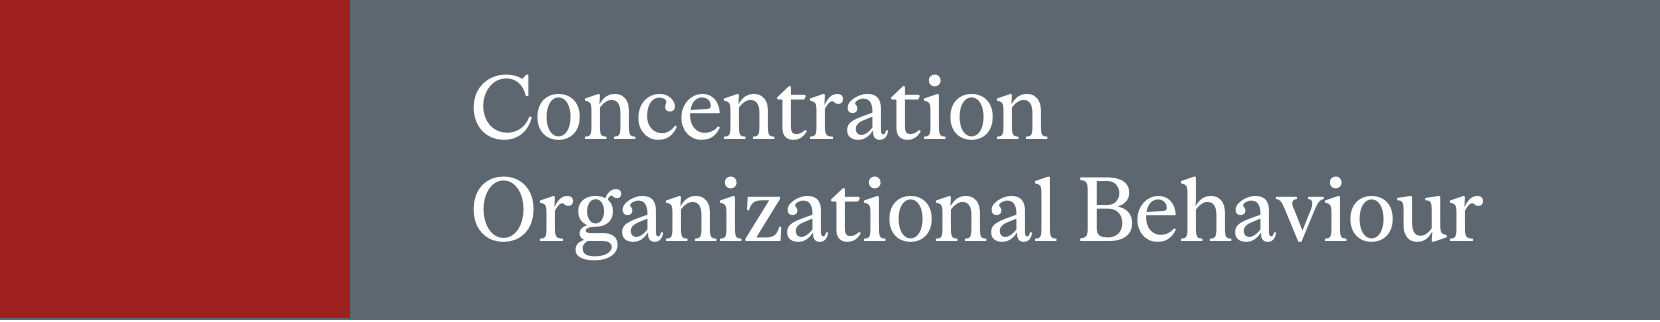 Concentration Organizational Behaviour